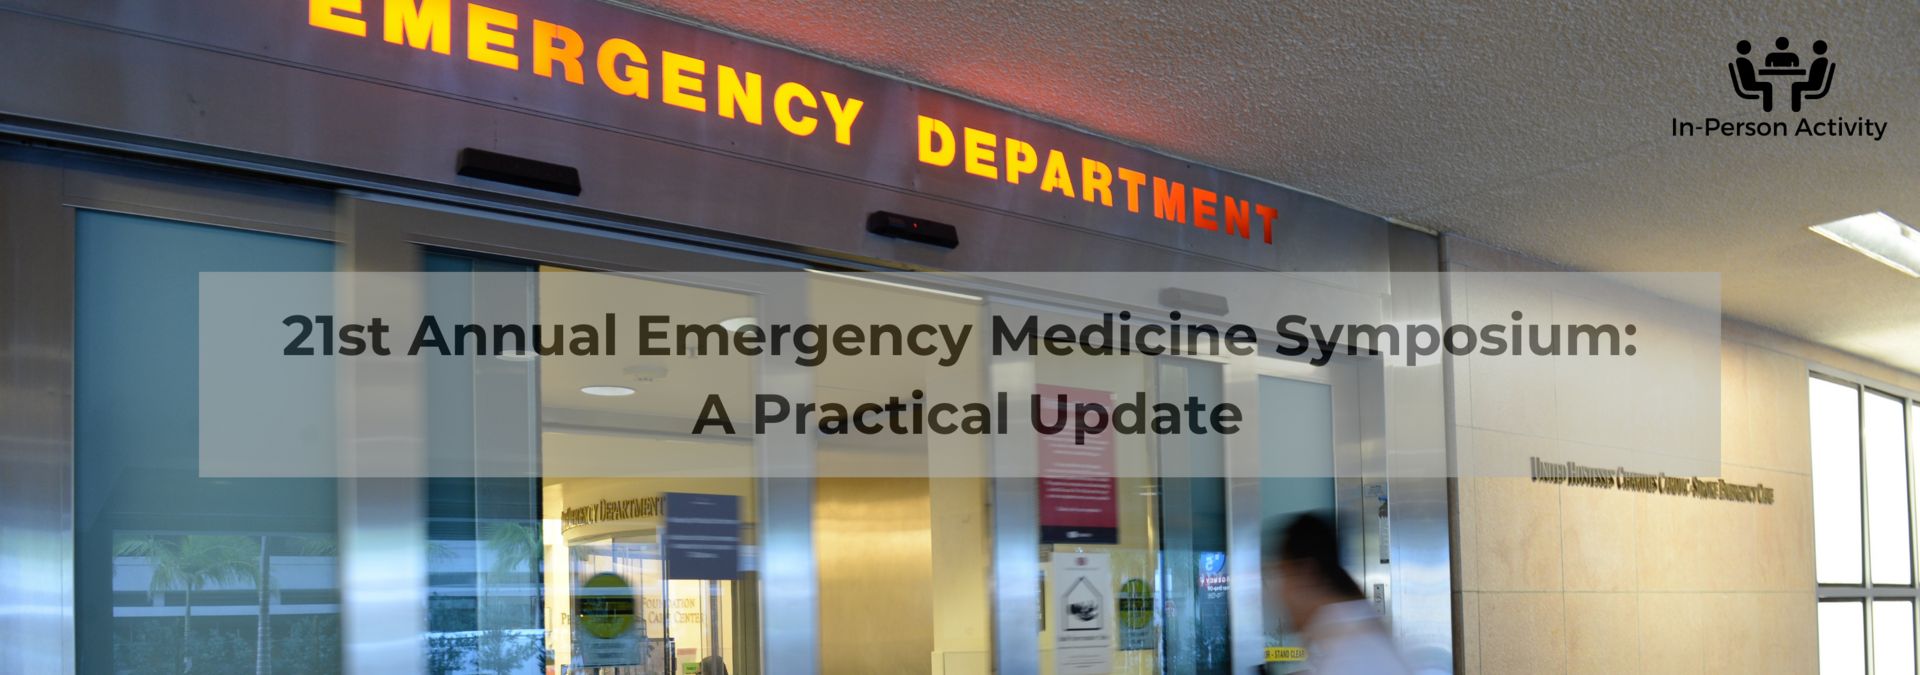 21st Annual Emergency Medicine Symposium: A Practical Update